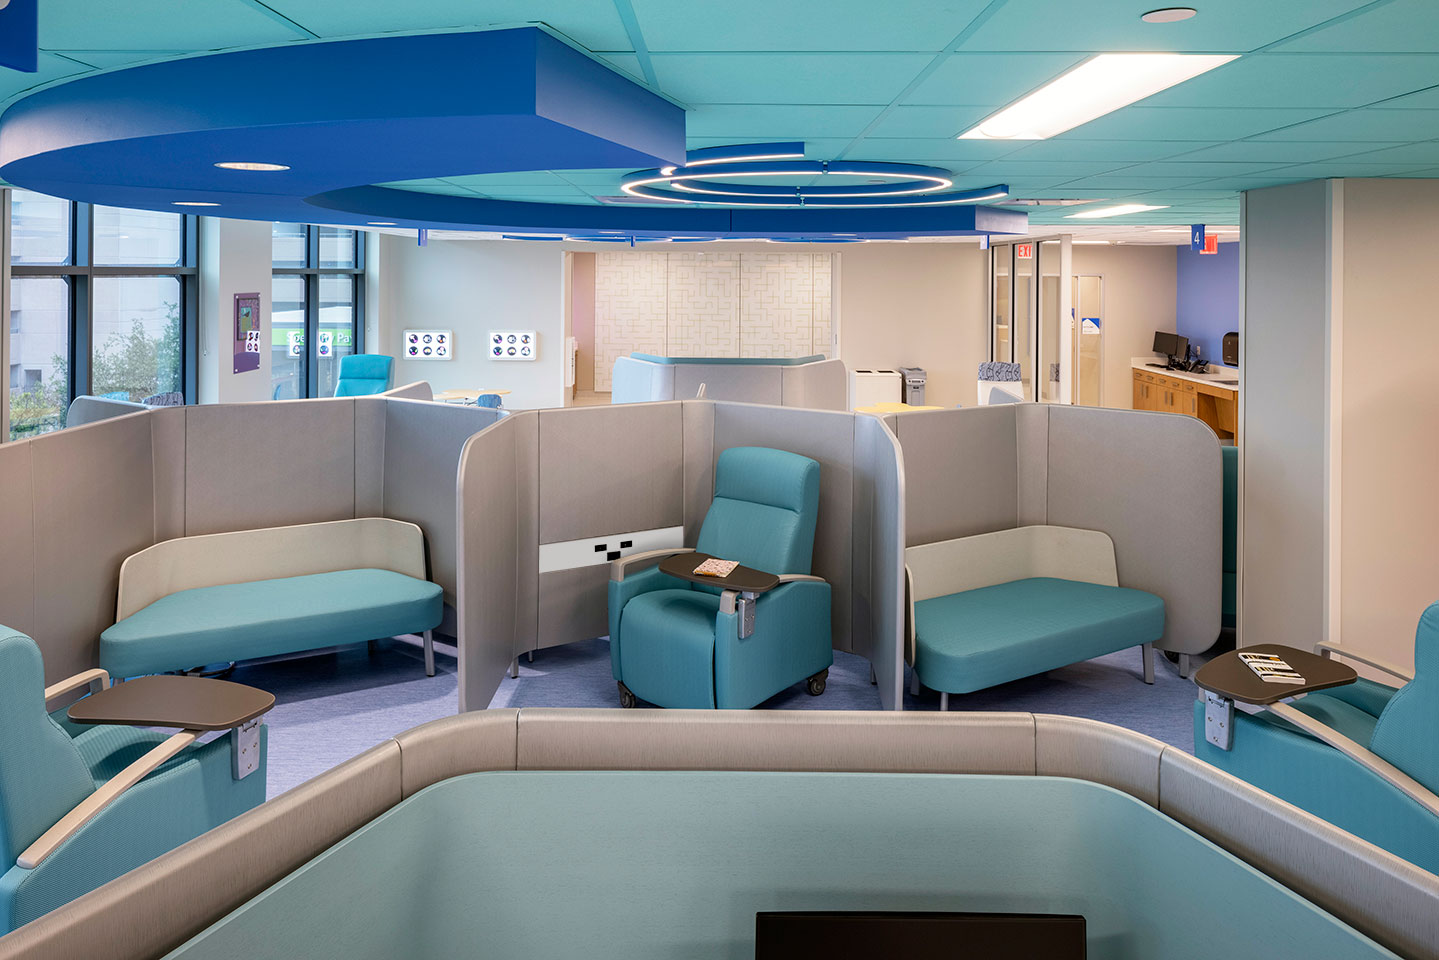 DARRAN Furniture - Dell Pediatrics